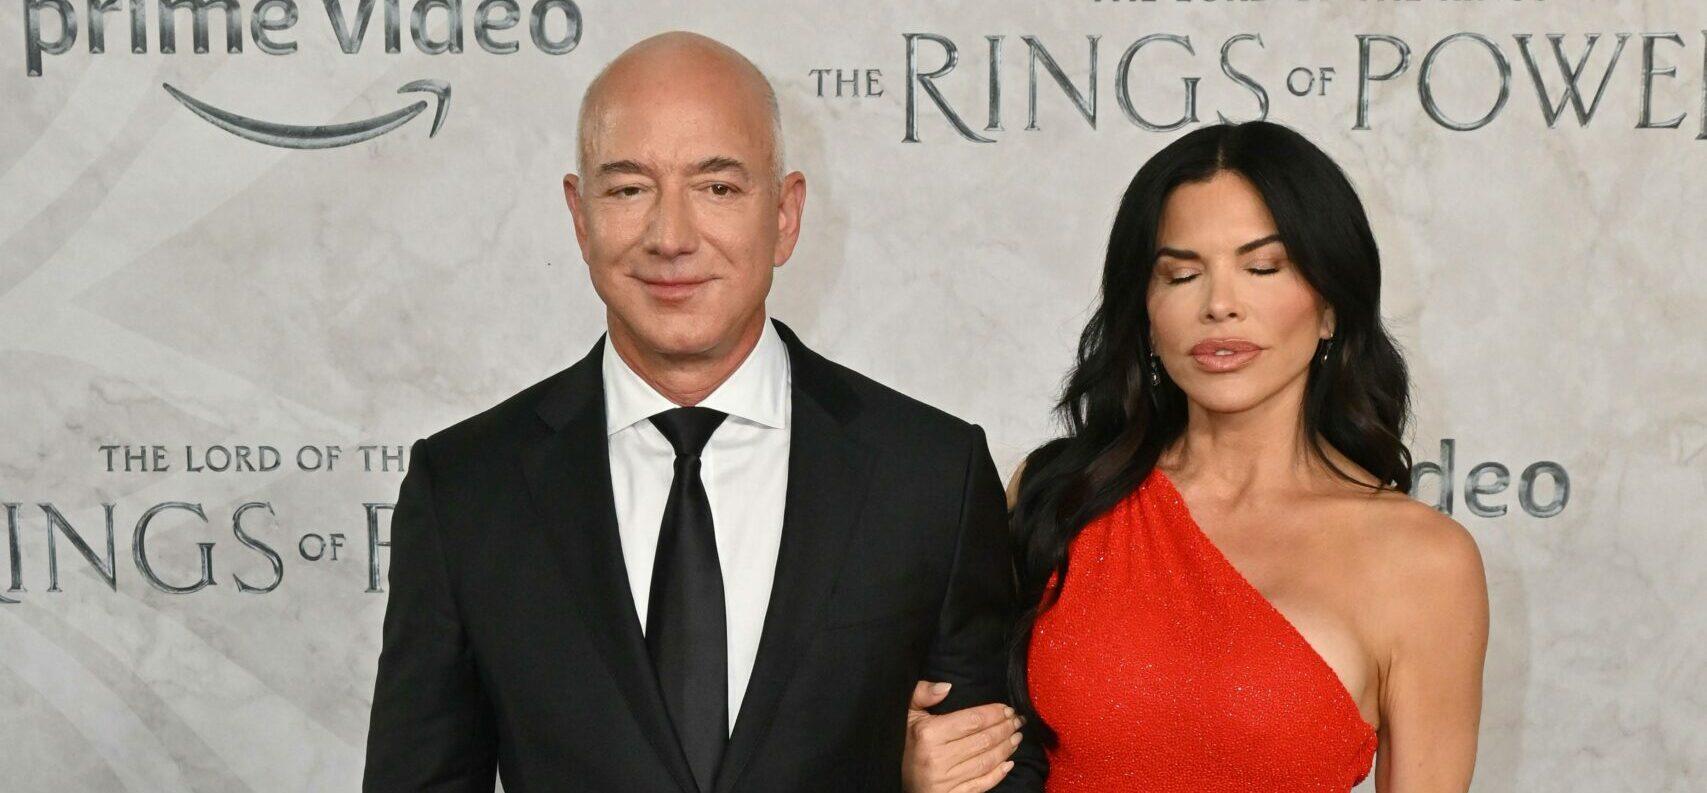 Amazon head Jeff Bezos at LOTR premiere